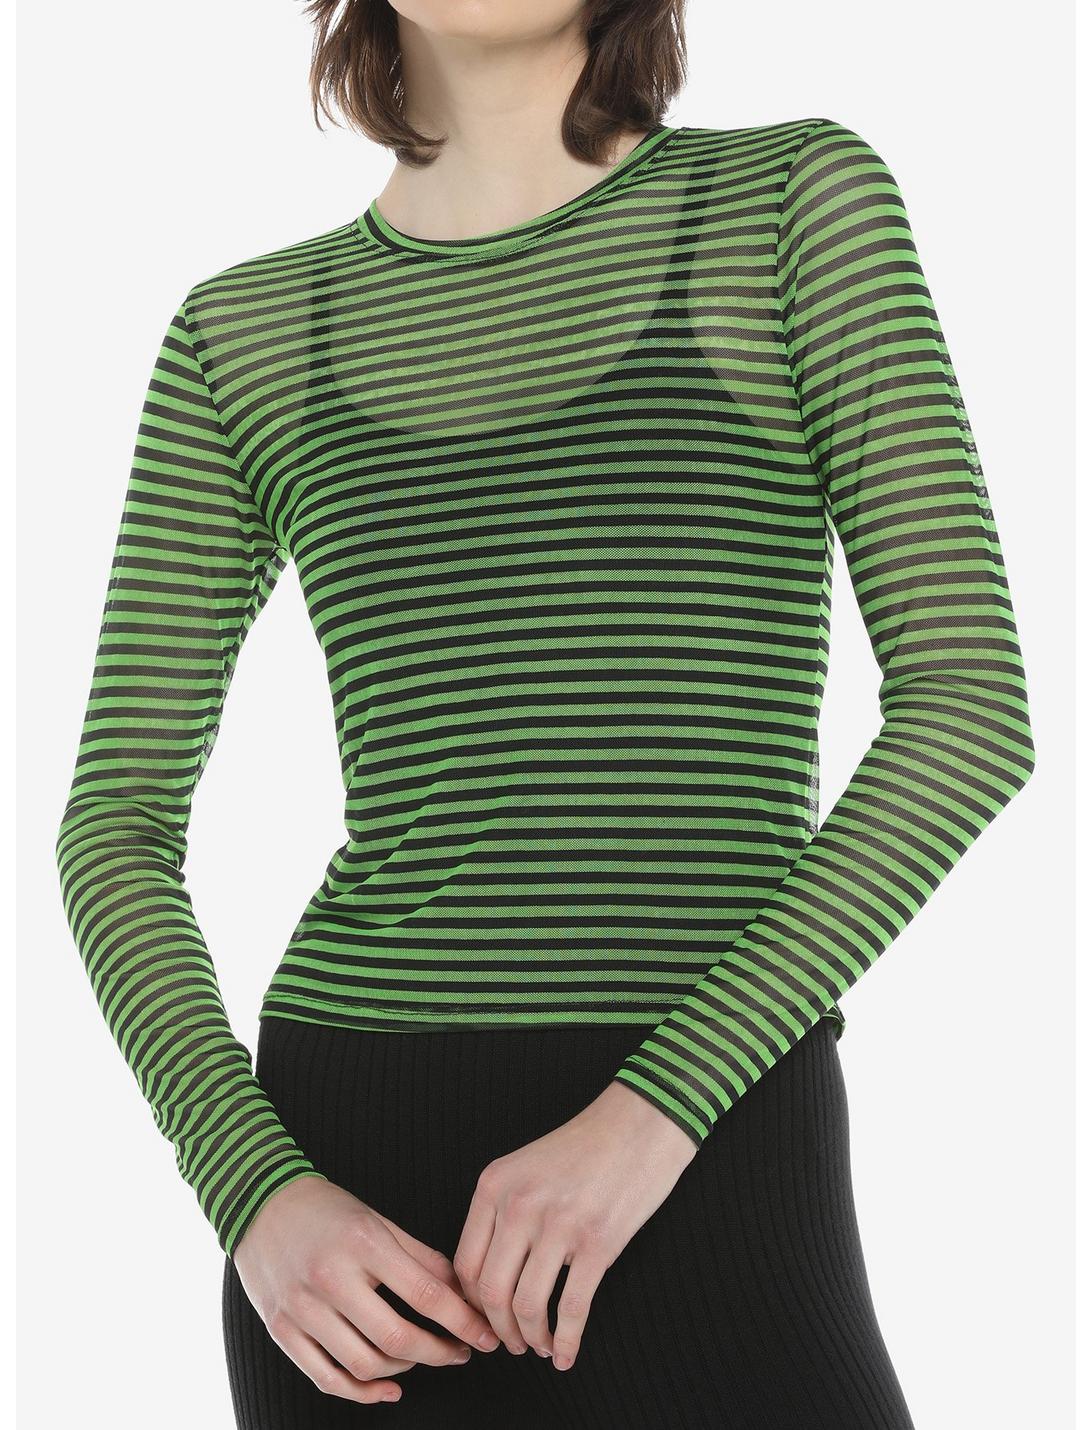 Green & Black Stripe Mesh Girls Long-Sleeve Top, STRIPES, hi-res